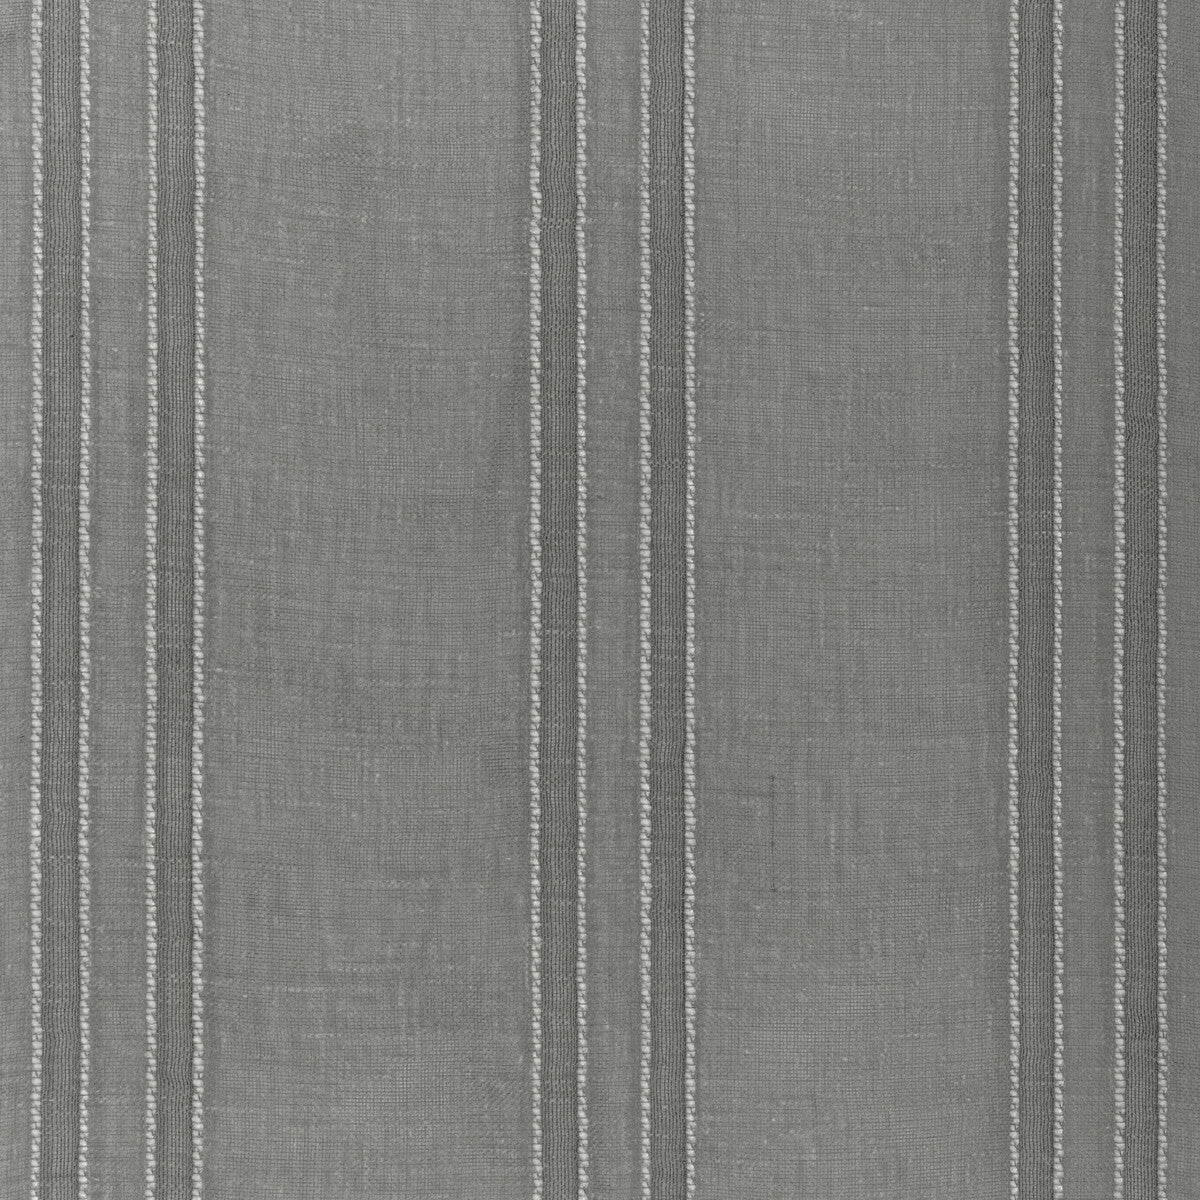 Kravet Basics fabric in 4805-11 color - pattern 4805.11.0 - by Kravet Basics in the Gis collection